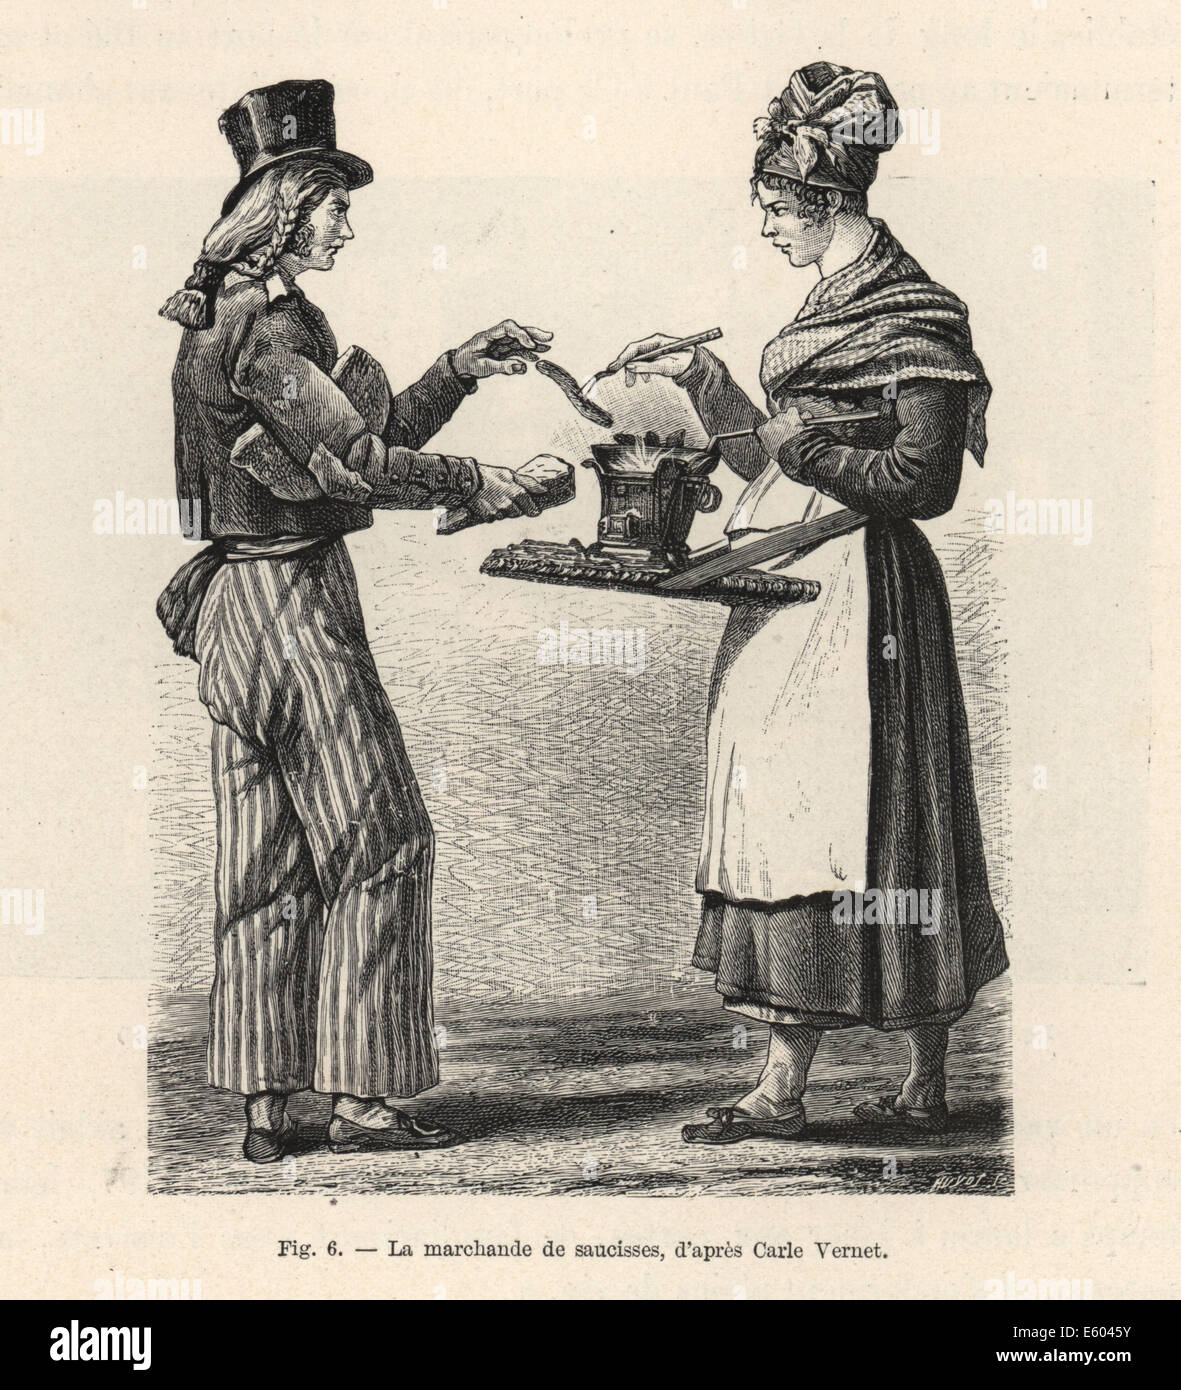 Itinerant sausage seller, circa 1800. Stock Photo